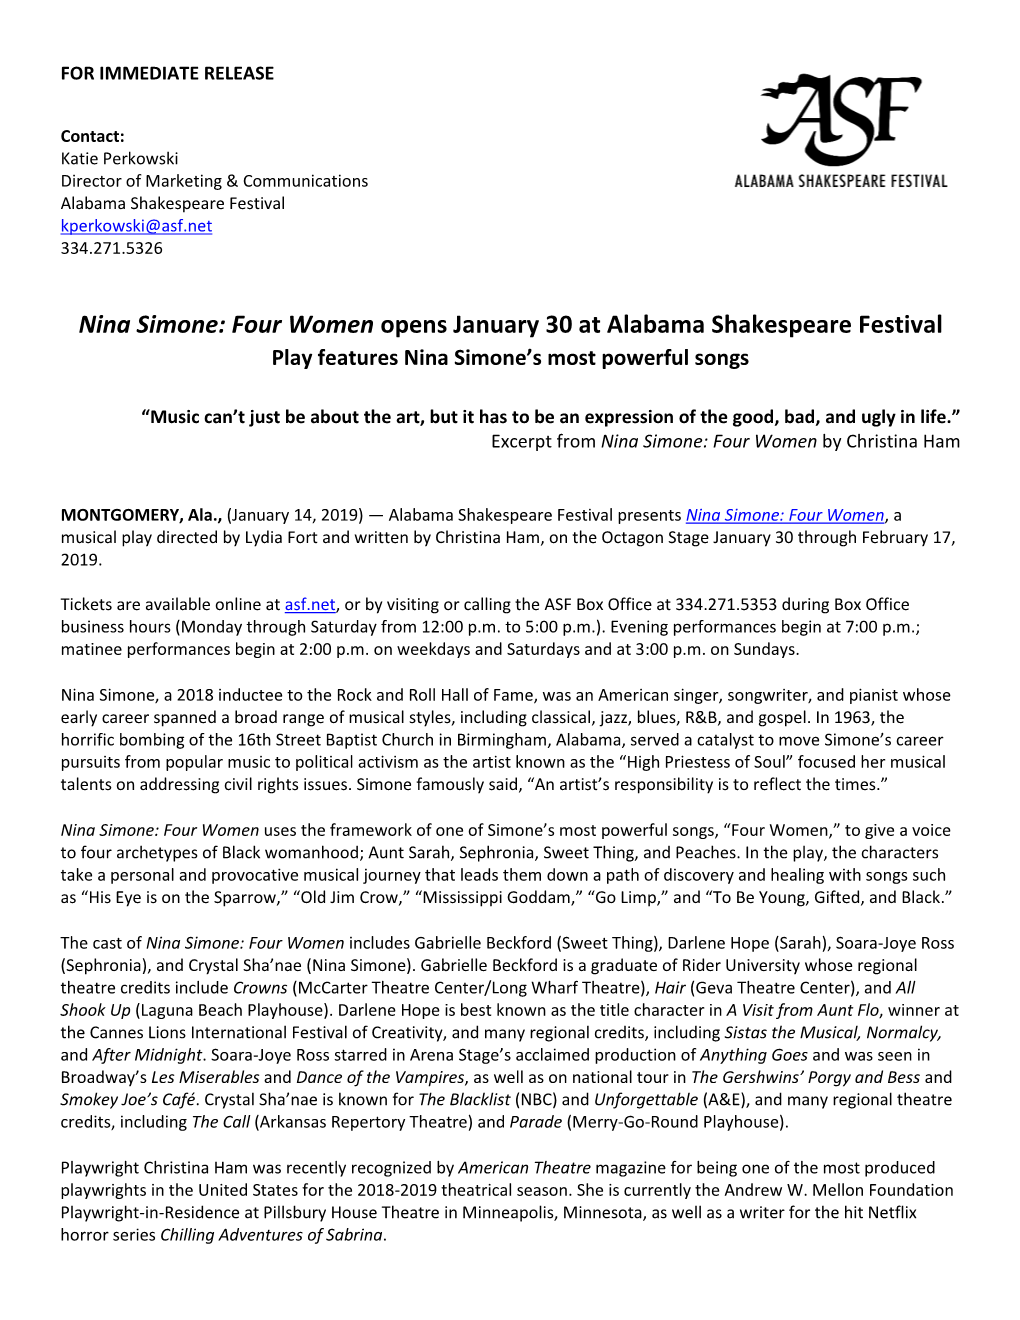 Nina Simone: Four Women Opens January 30 at Alabama Shakespeare Festival Play Features Nina Simone’S Most Powerful Songs